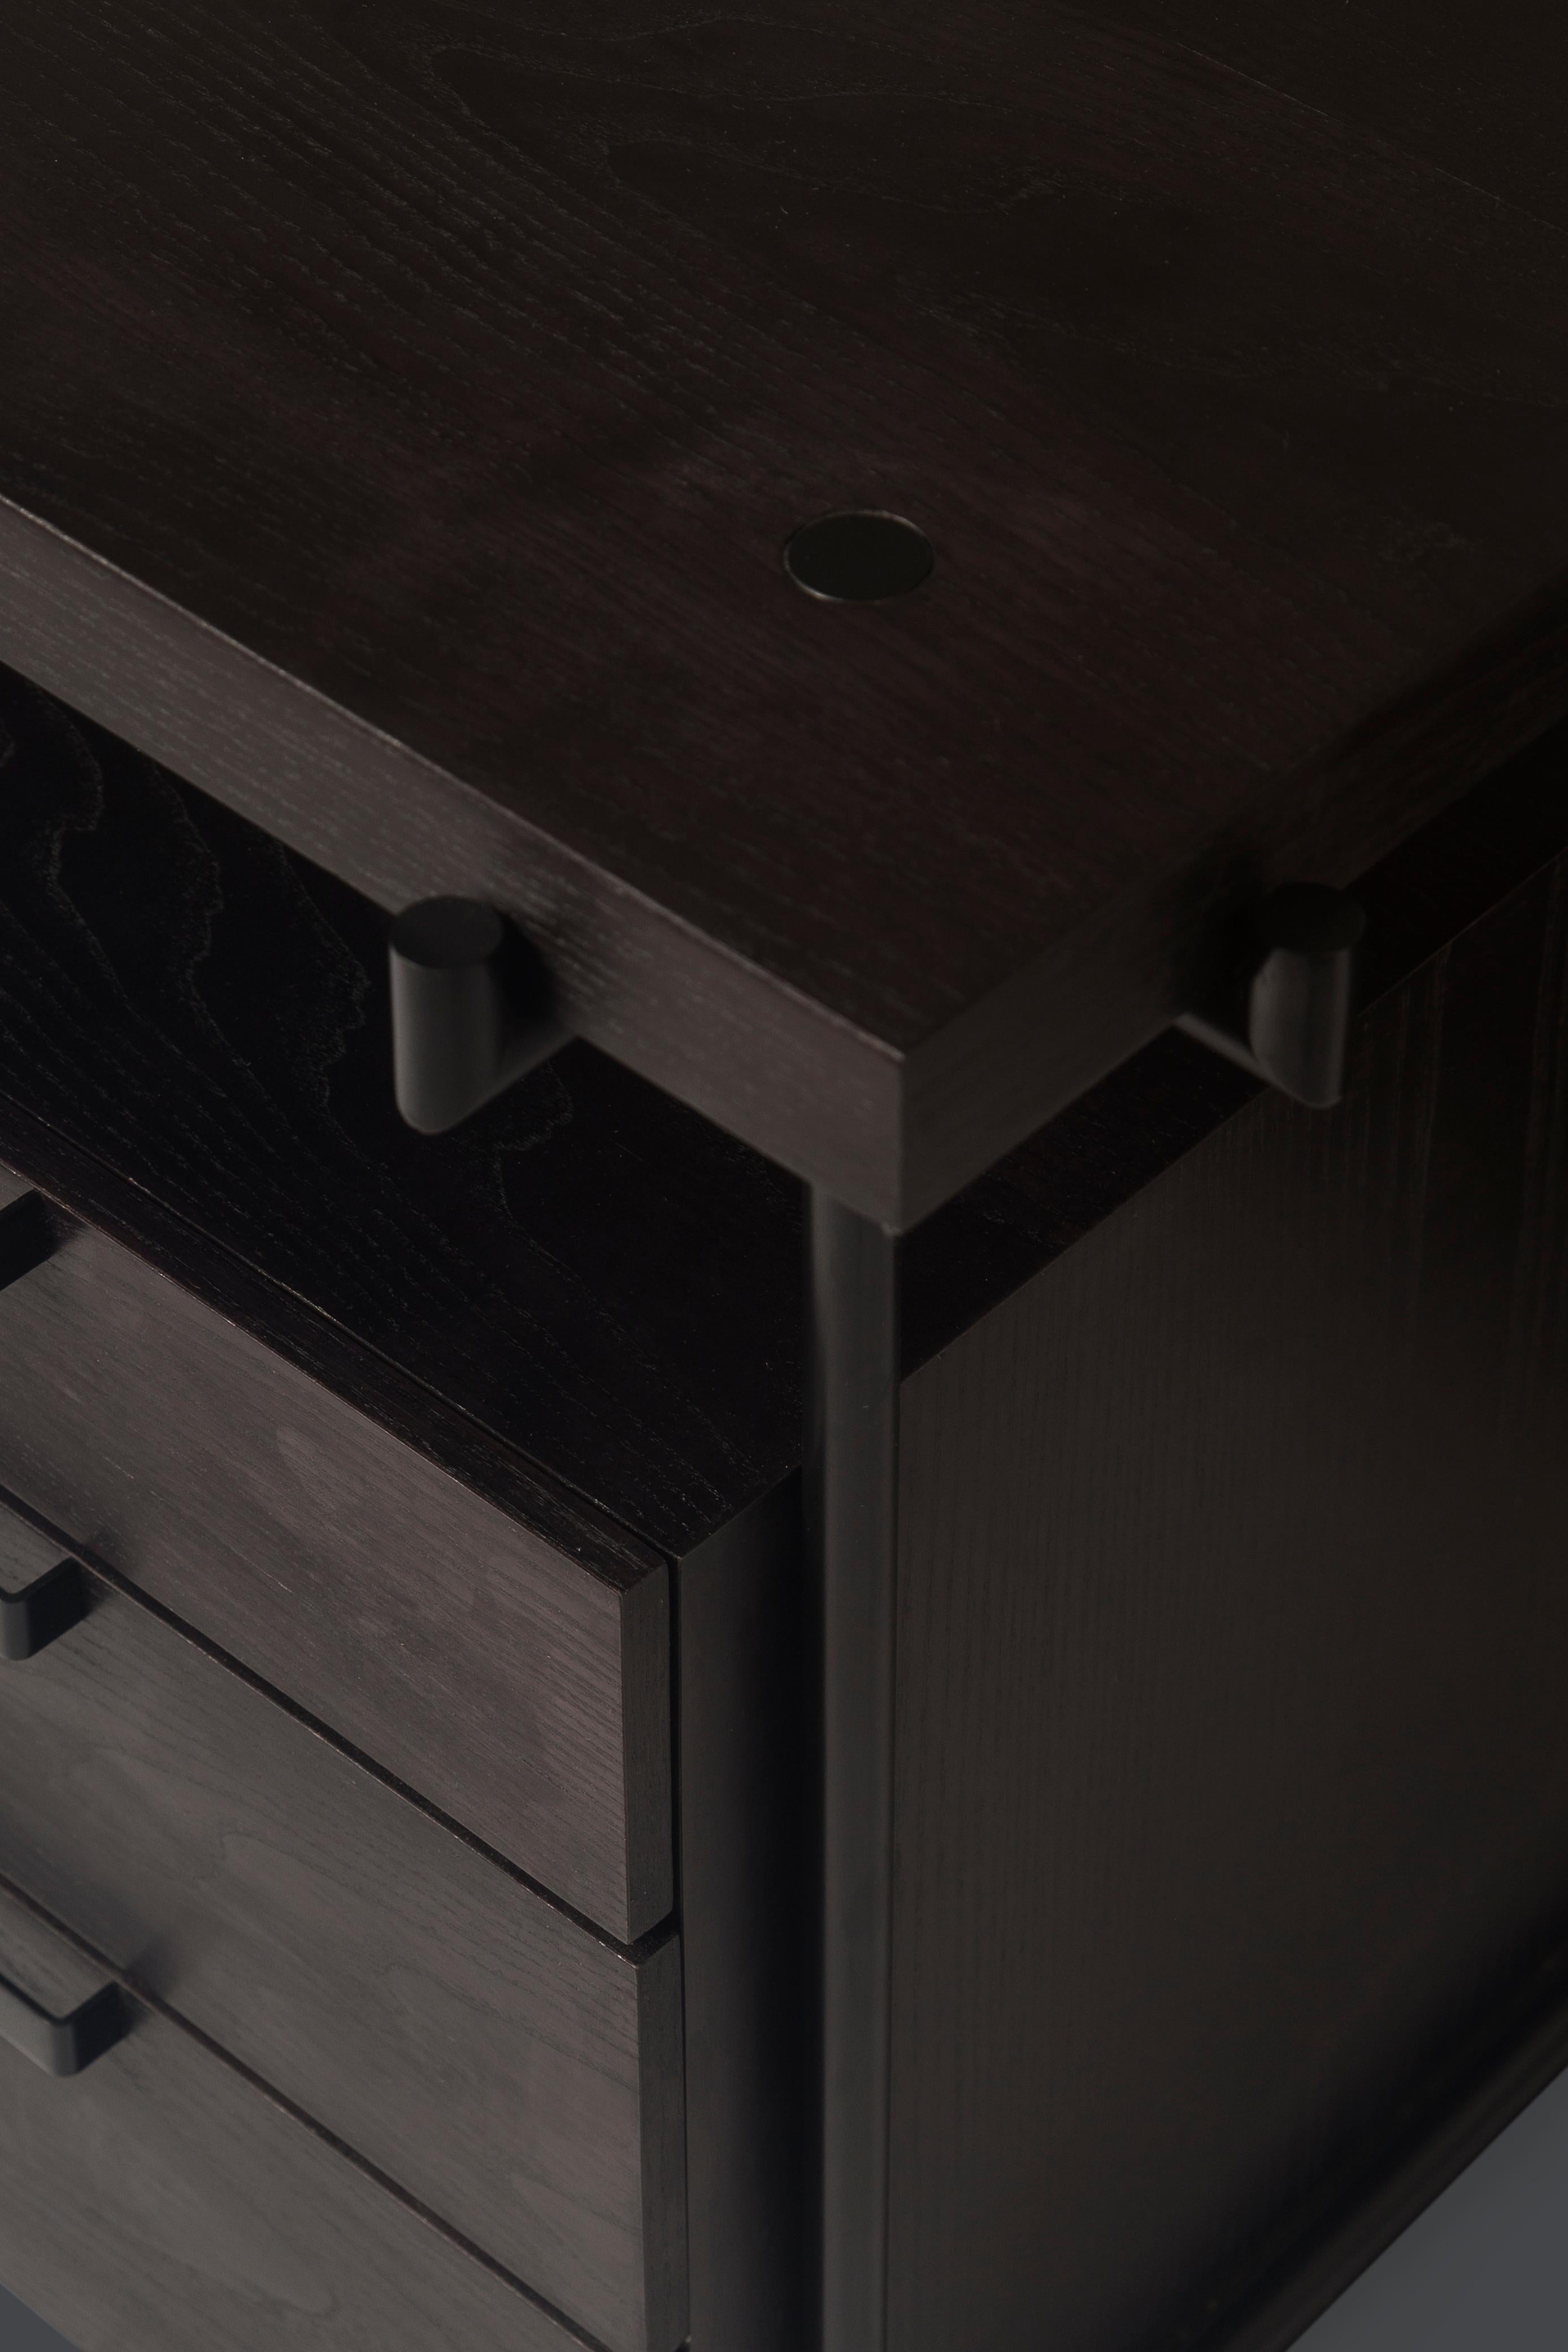 Steel Black Desk Files Drawers, Wood and Metal, Brazilian Mid Century Modern Style